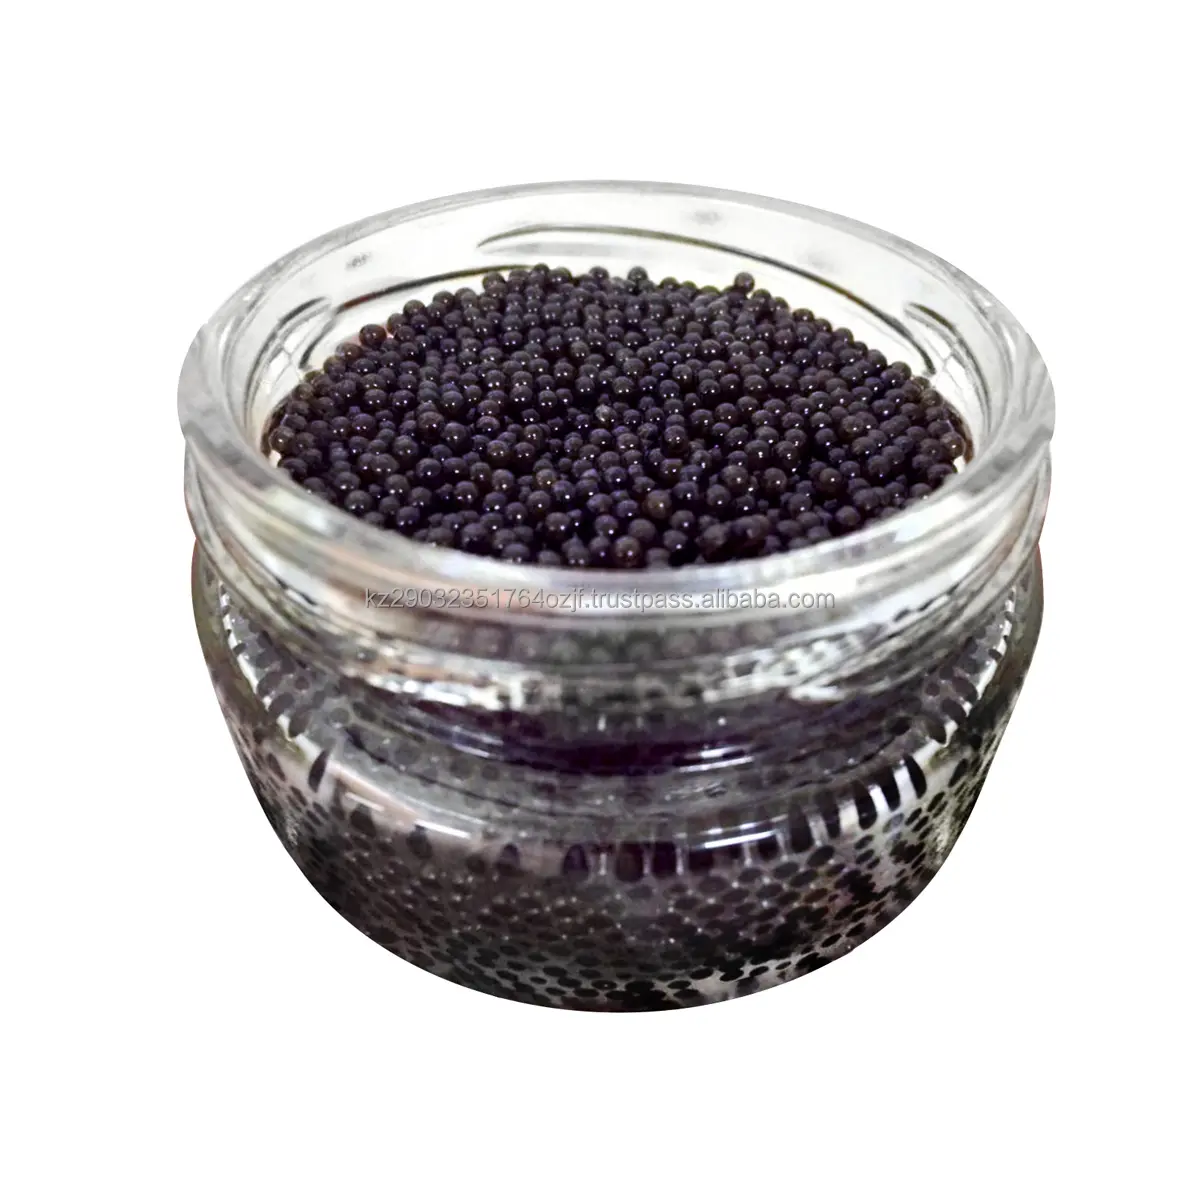 Culinary delight farm-raised bester caviar pre-packed in jar from fishfarm